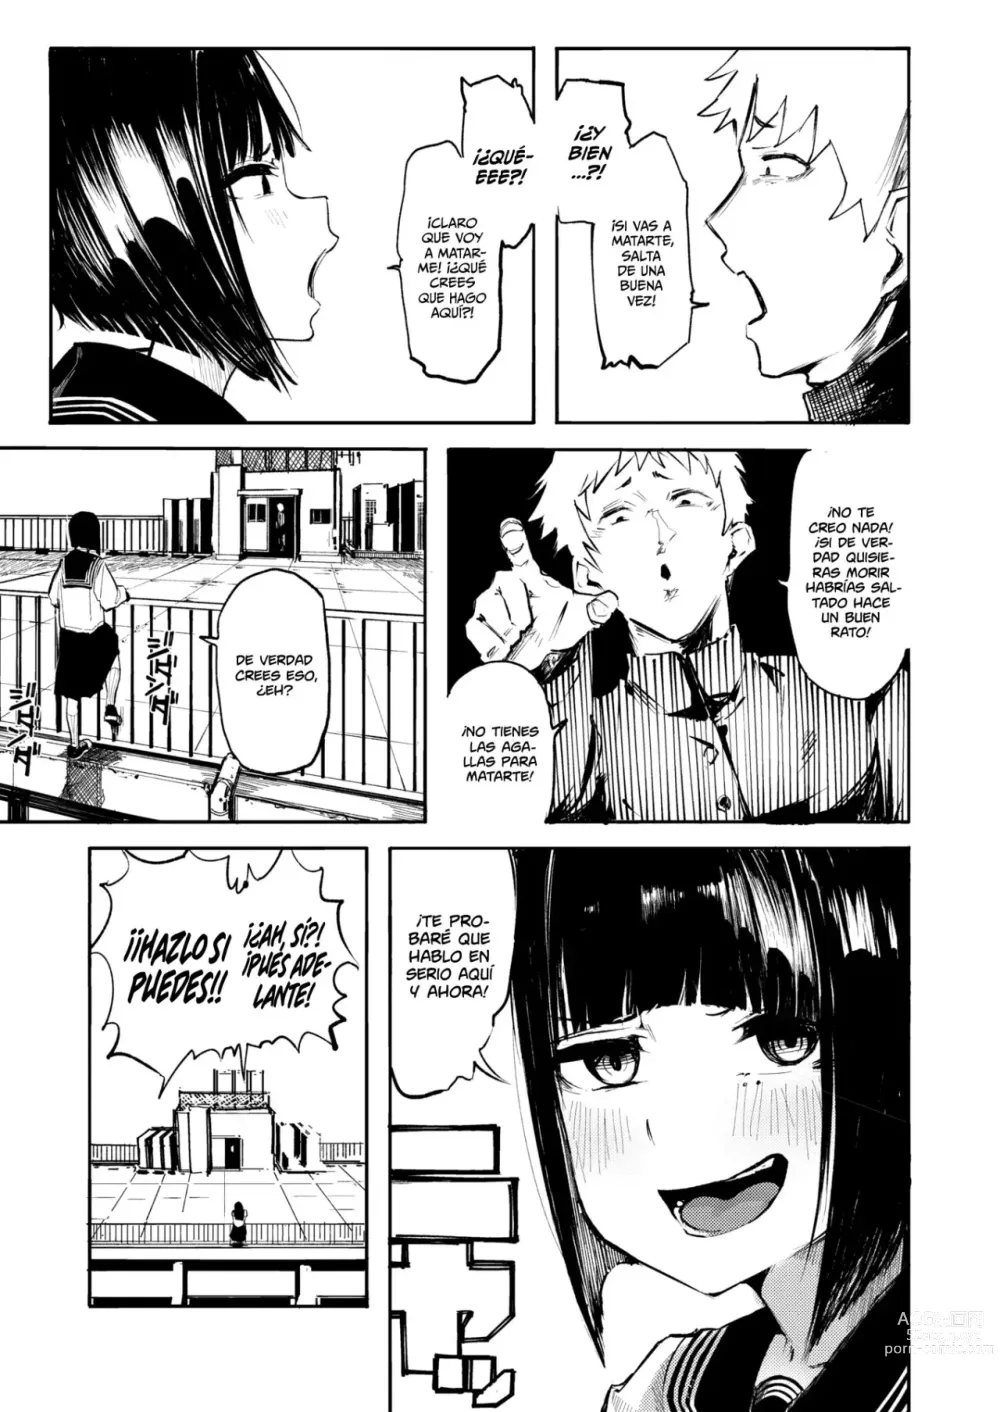 Page 3 of doujinshi Chica Suicida